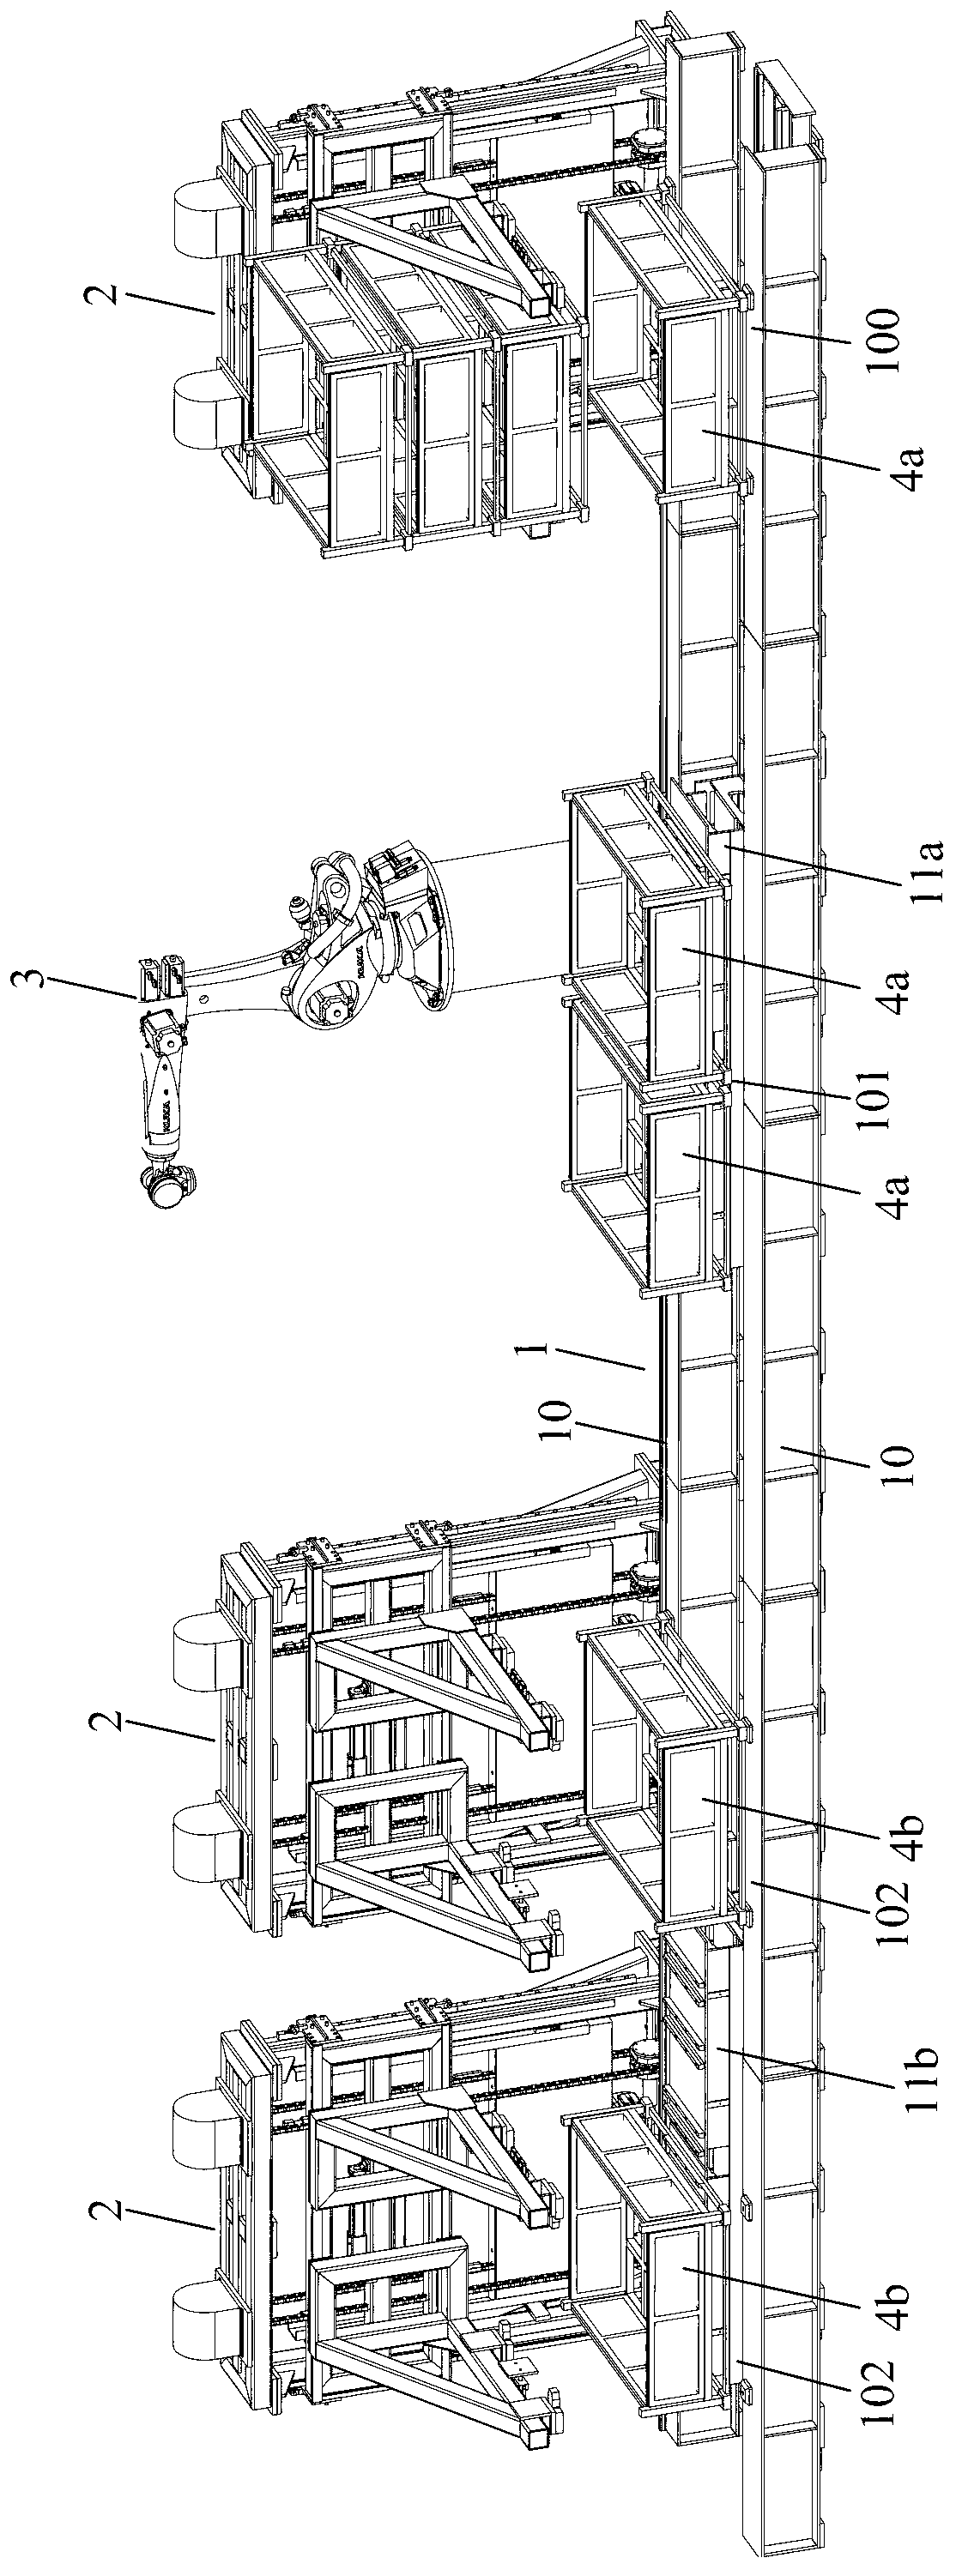 Automatic workpiece basketing and transmitting system